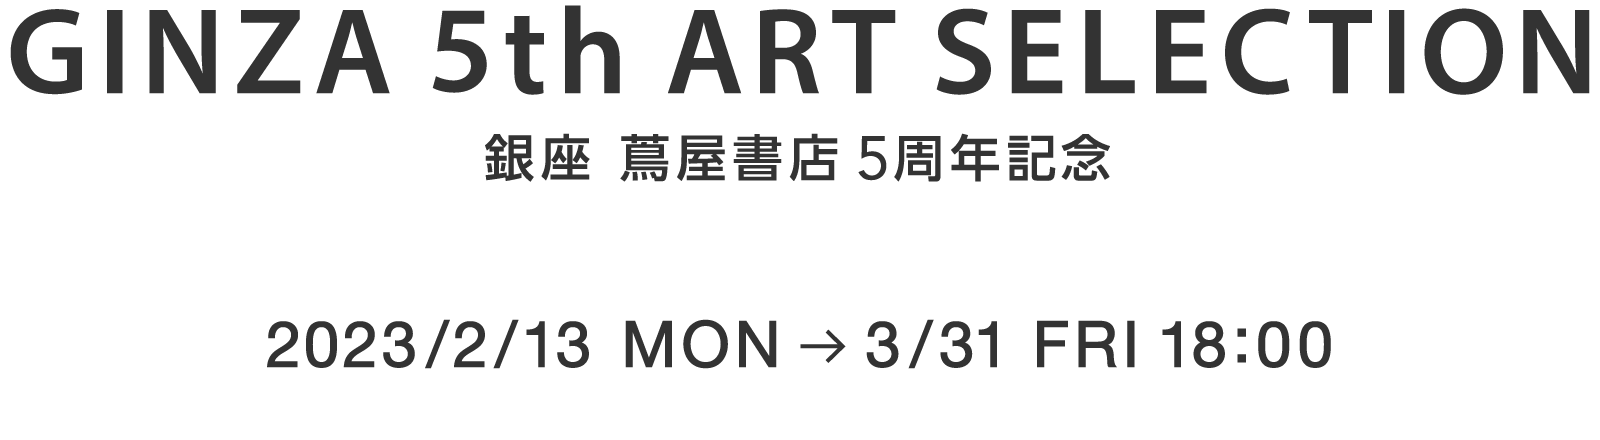 GINZA 5th ART SELECTION 銀座 蔦屋書店 5周年記念 2023/2/13 MON → 3/31 FRI 18:00